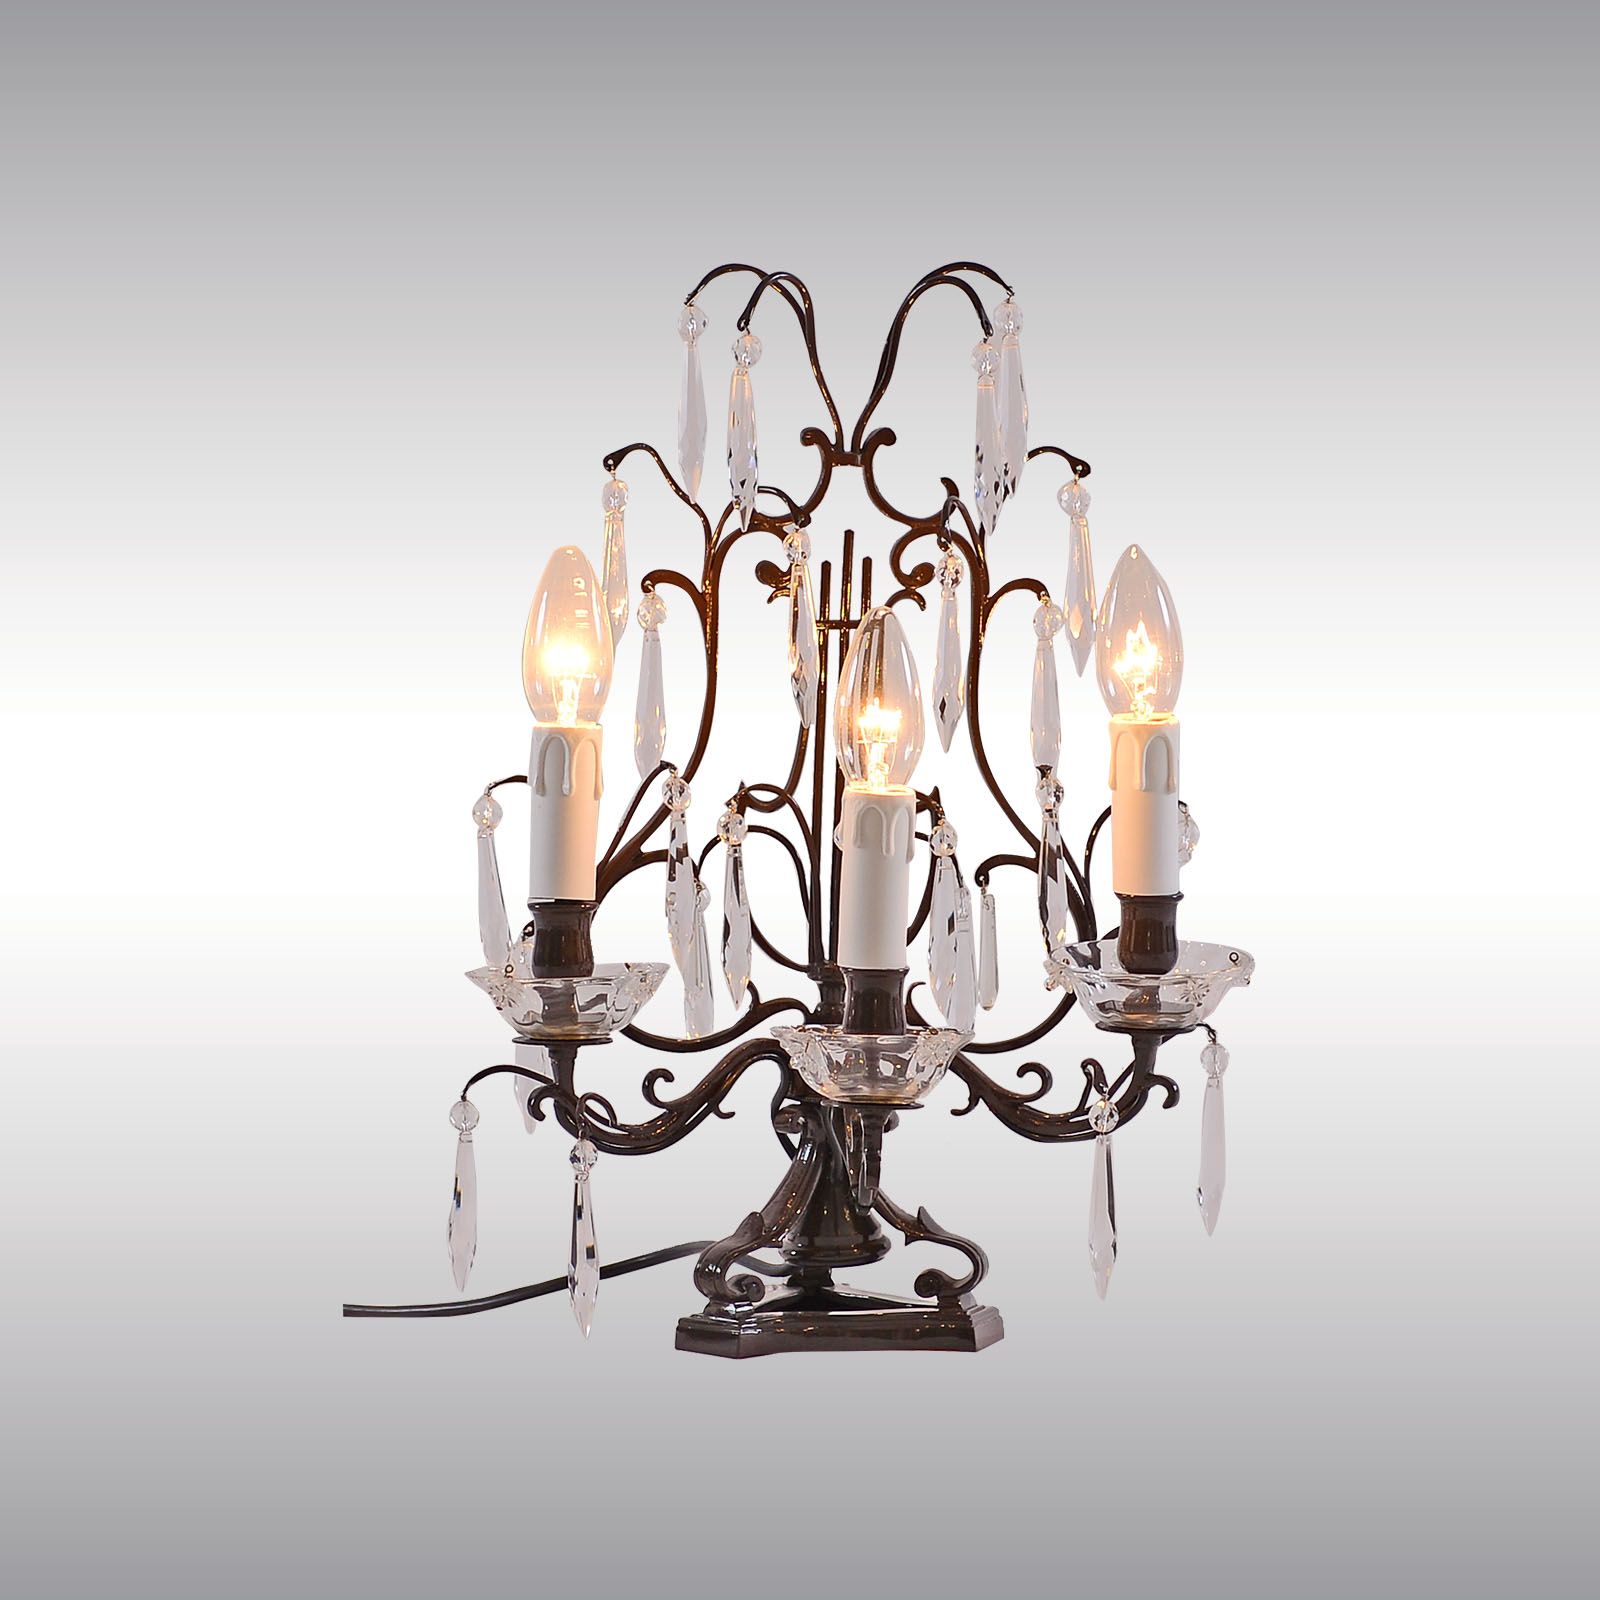 WOKA LAMPS VIENNA - OrderNr.: 80037|Tischlampen Paar in Lyraform - Design: WOKA